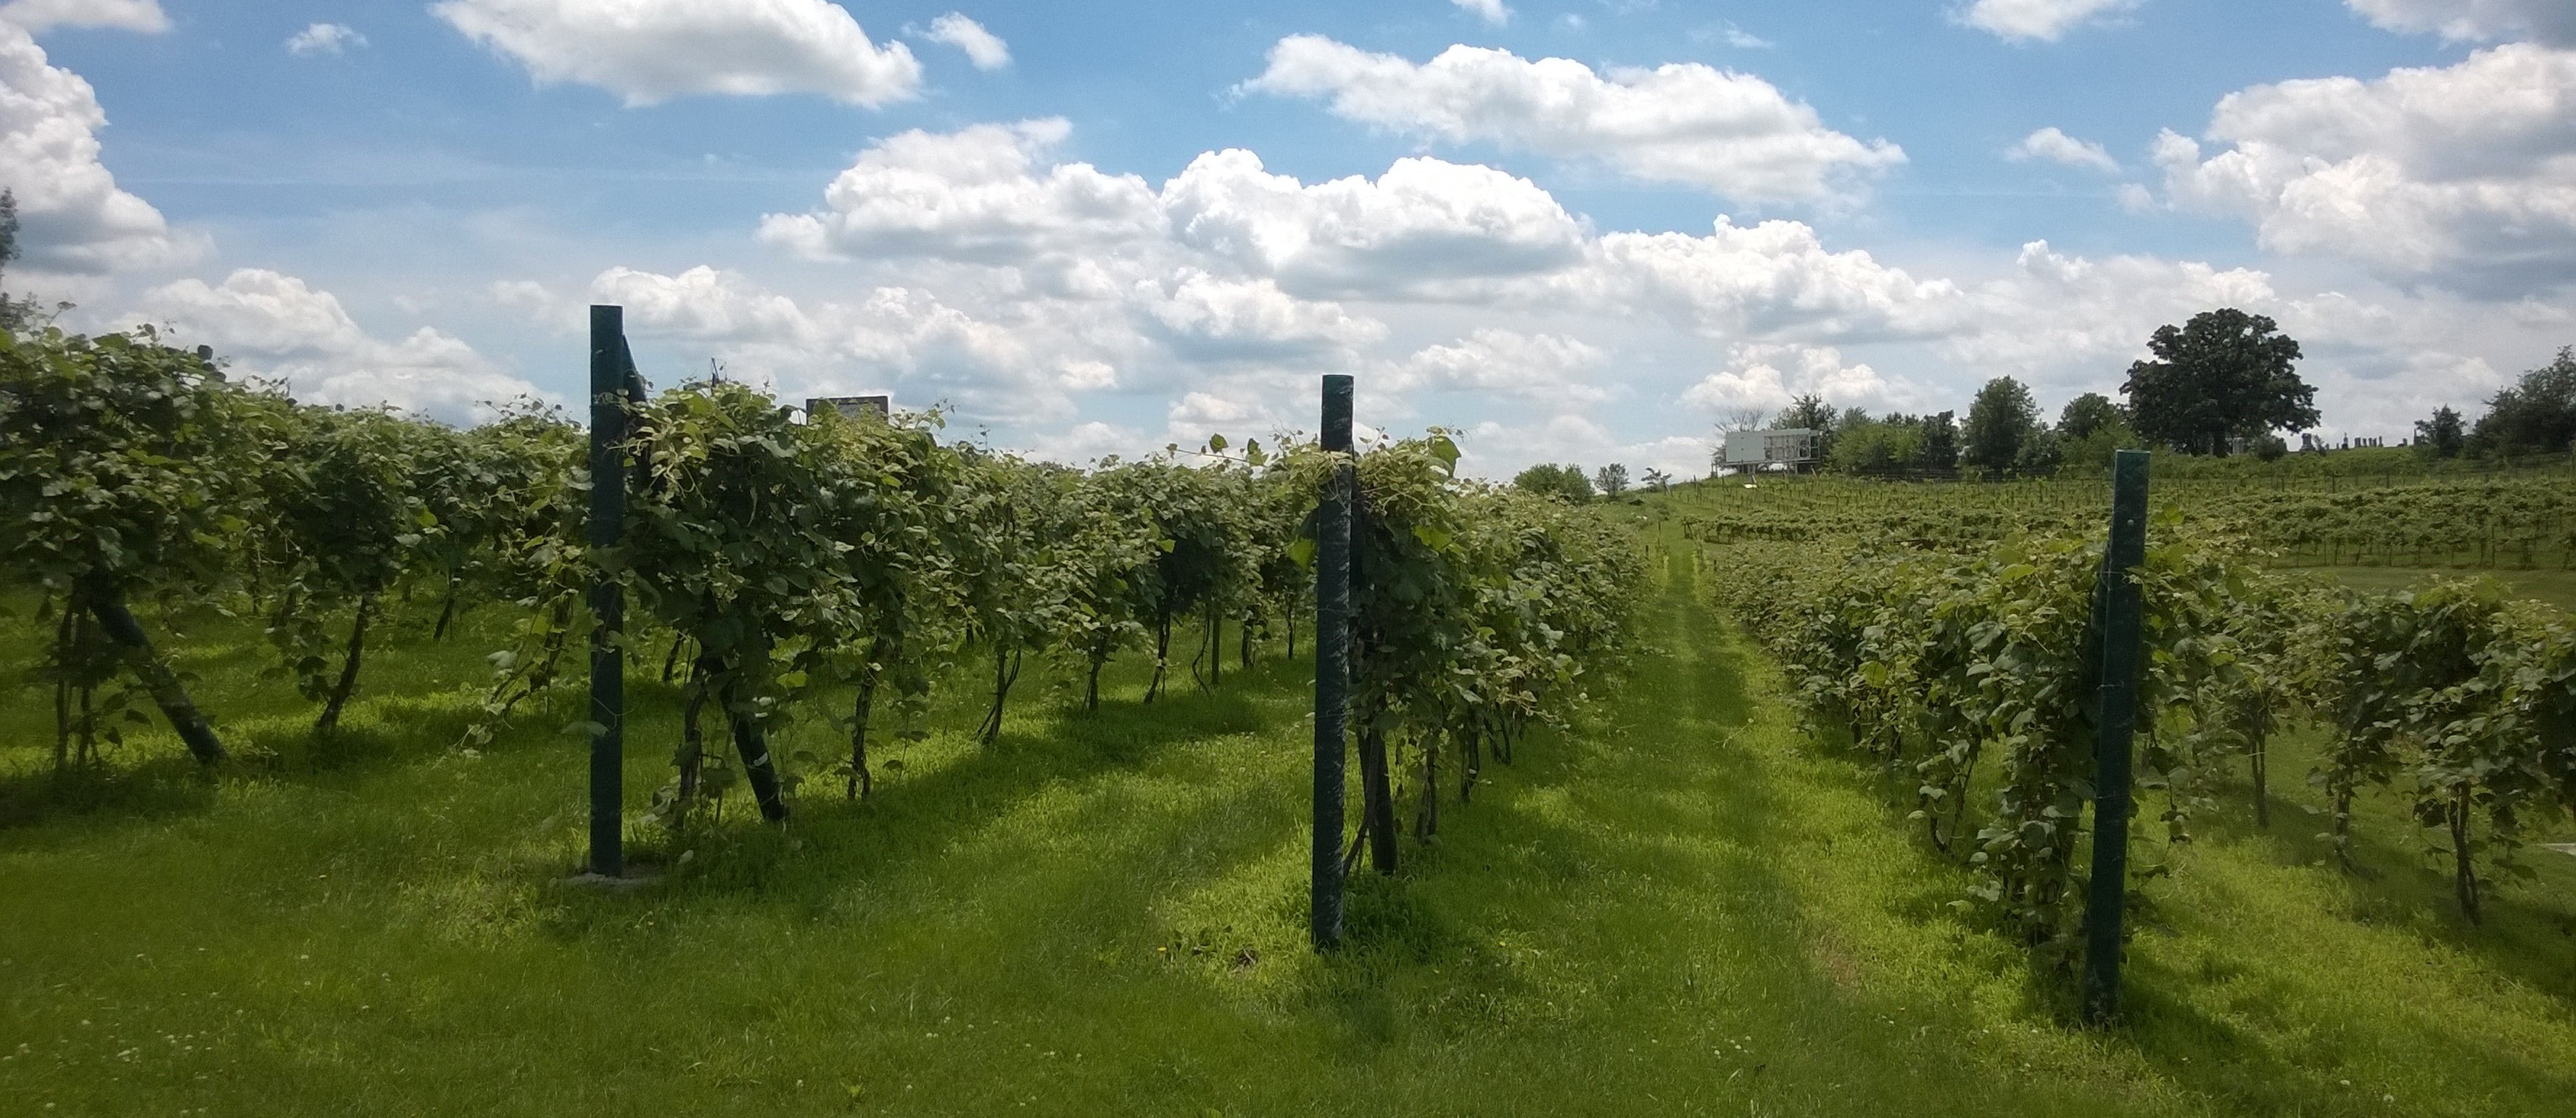 A green vineyard under a bright blue, cloud-filled sky. 